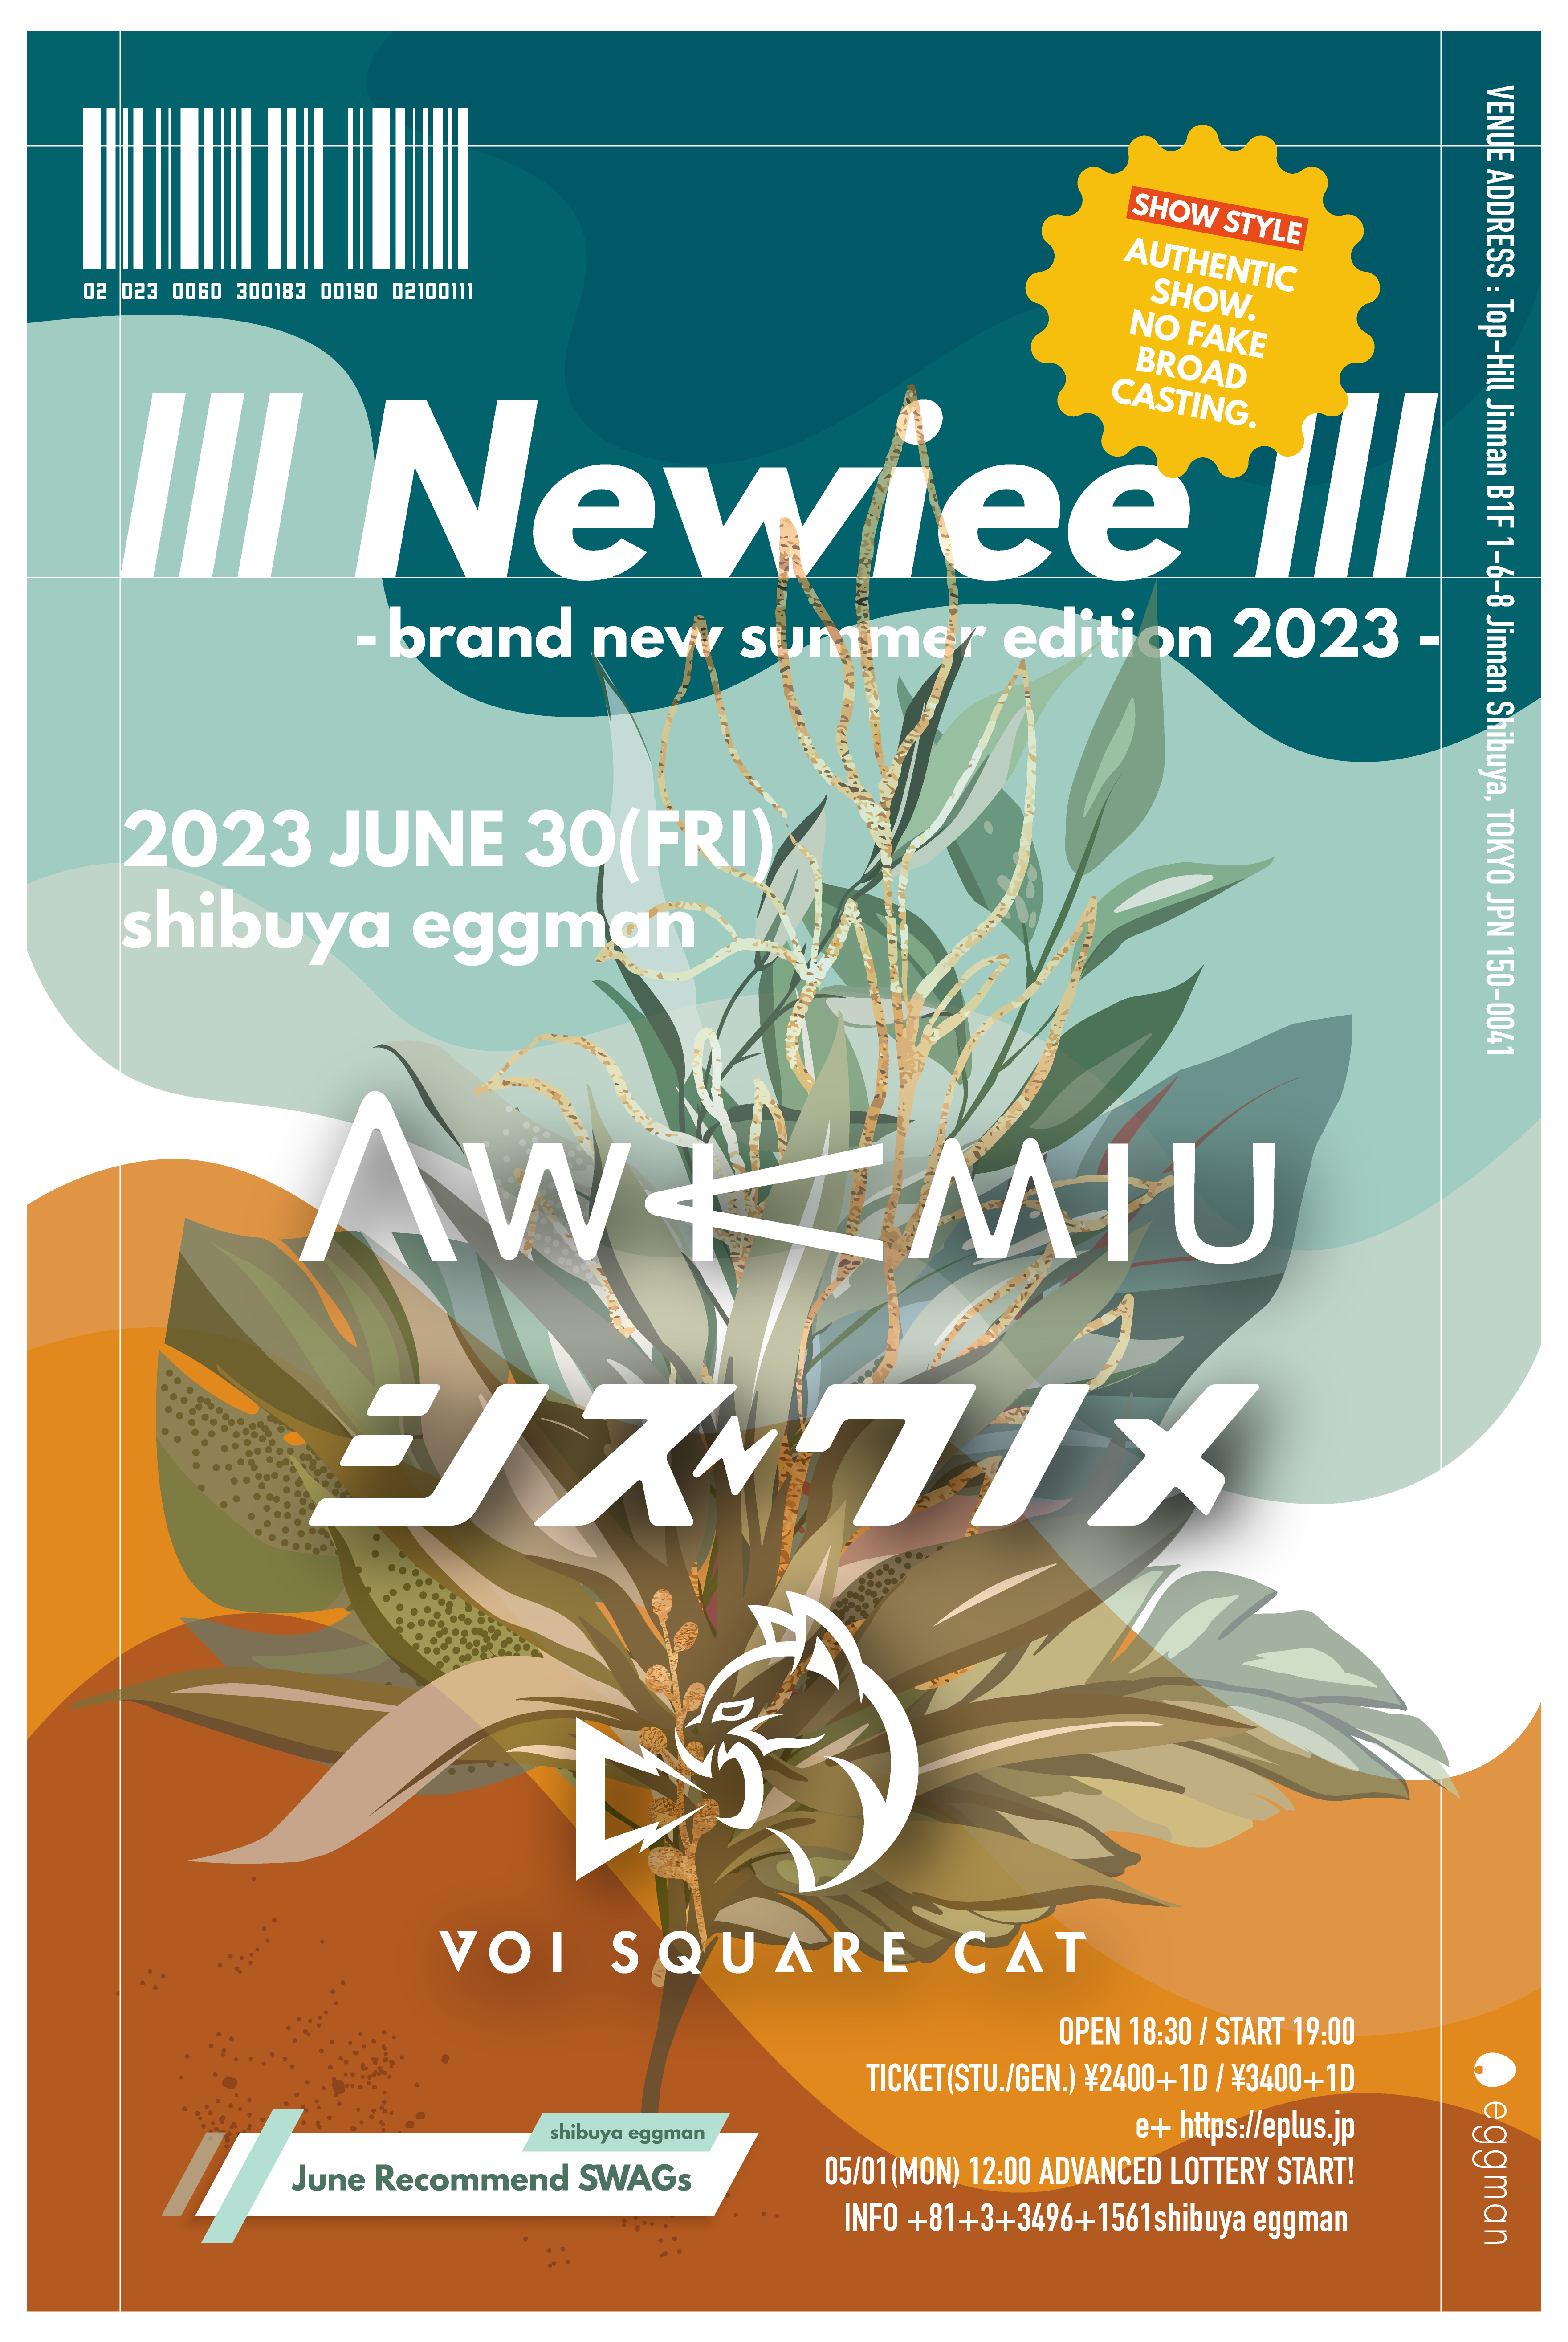 /// Newiee /// – brand new summer edition 2023 –